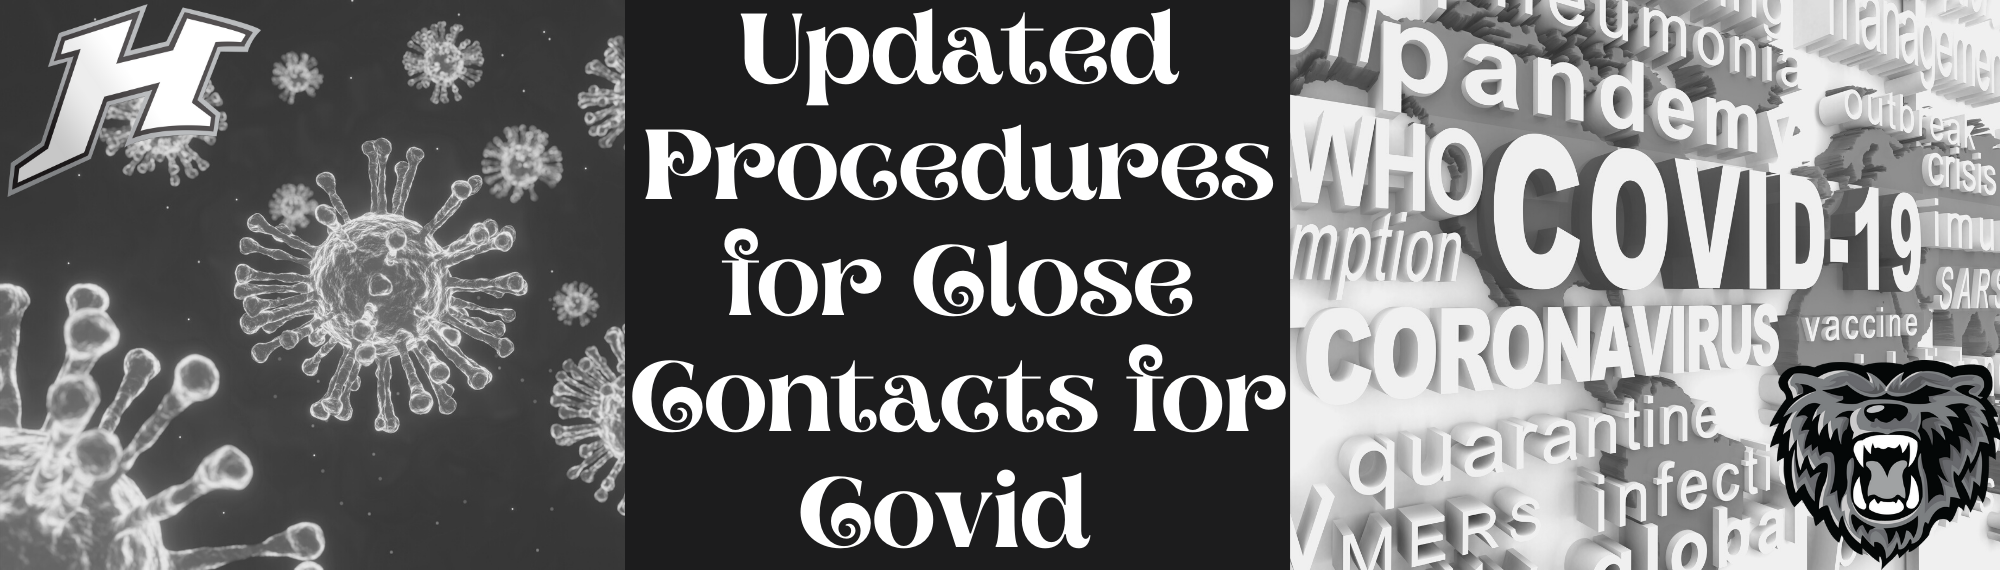 Close Contact Procedures